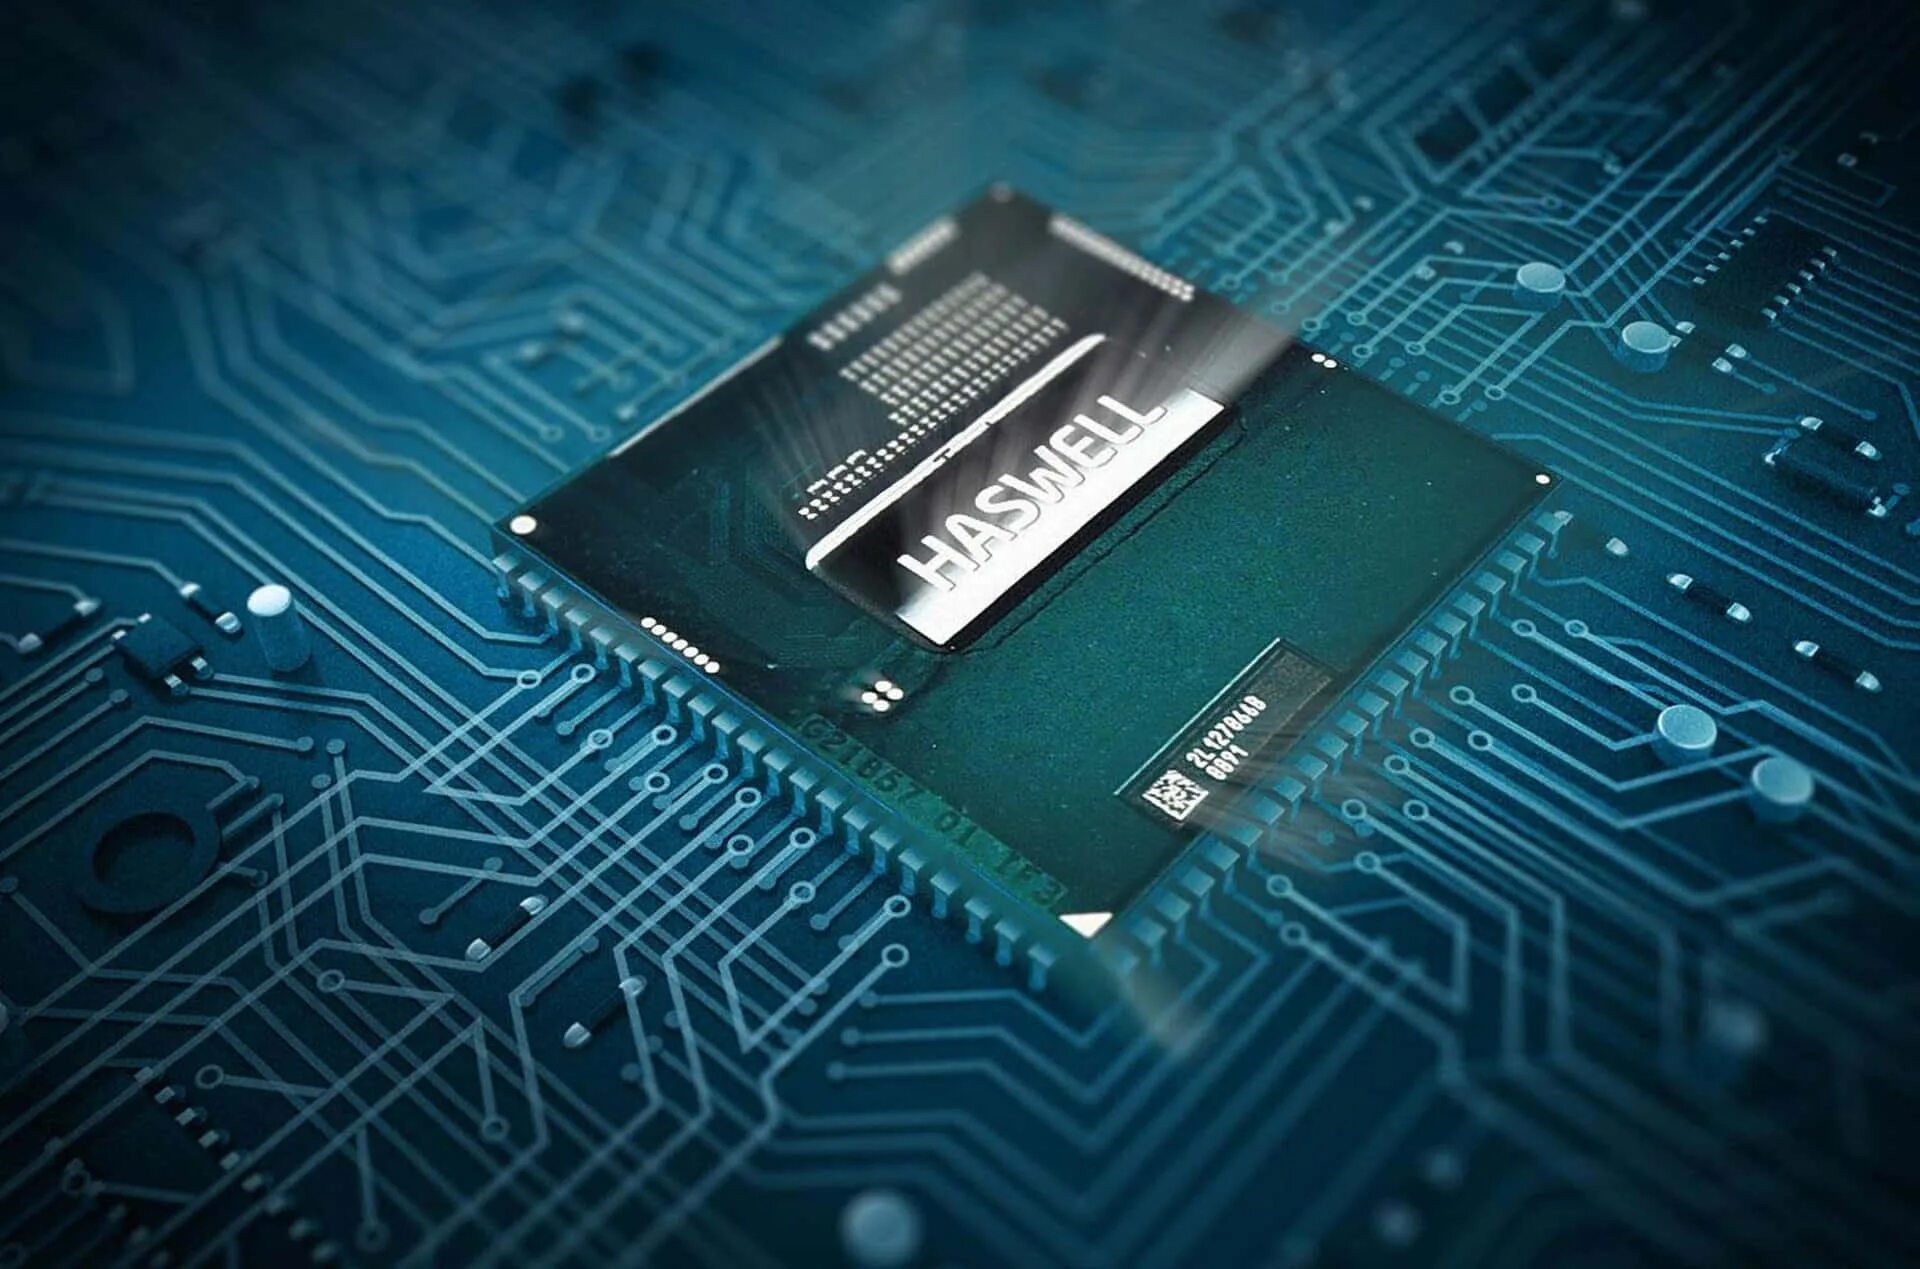 Kompyuter Core i5. Процессор для ноутбука Intel Core i5. Микропроцессор Интел.